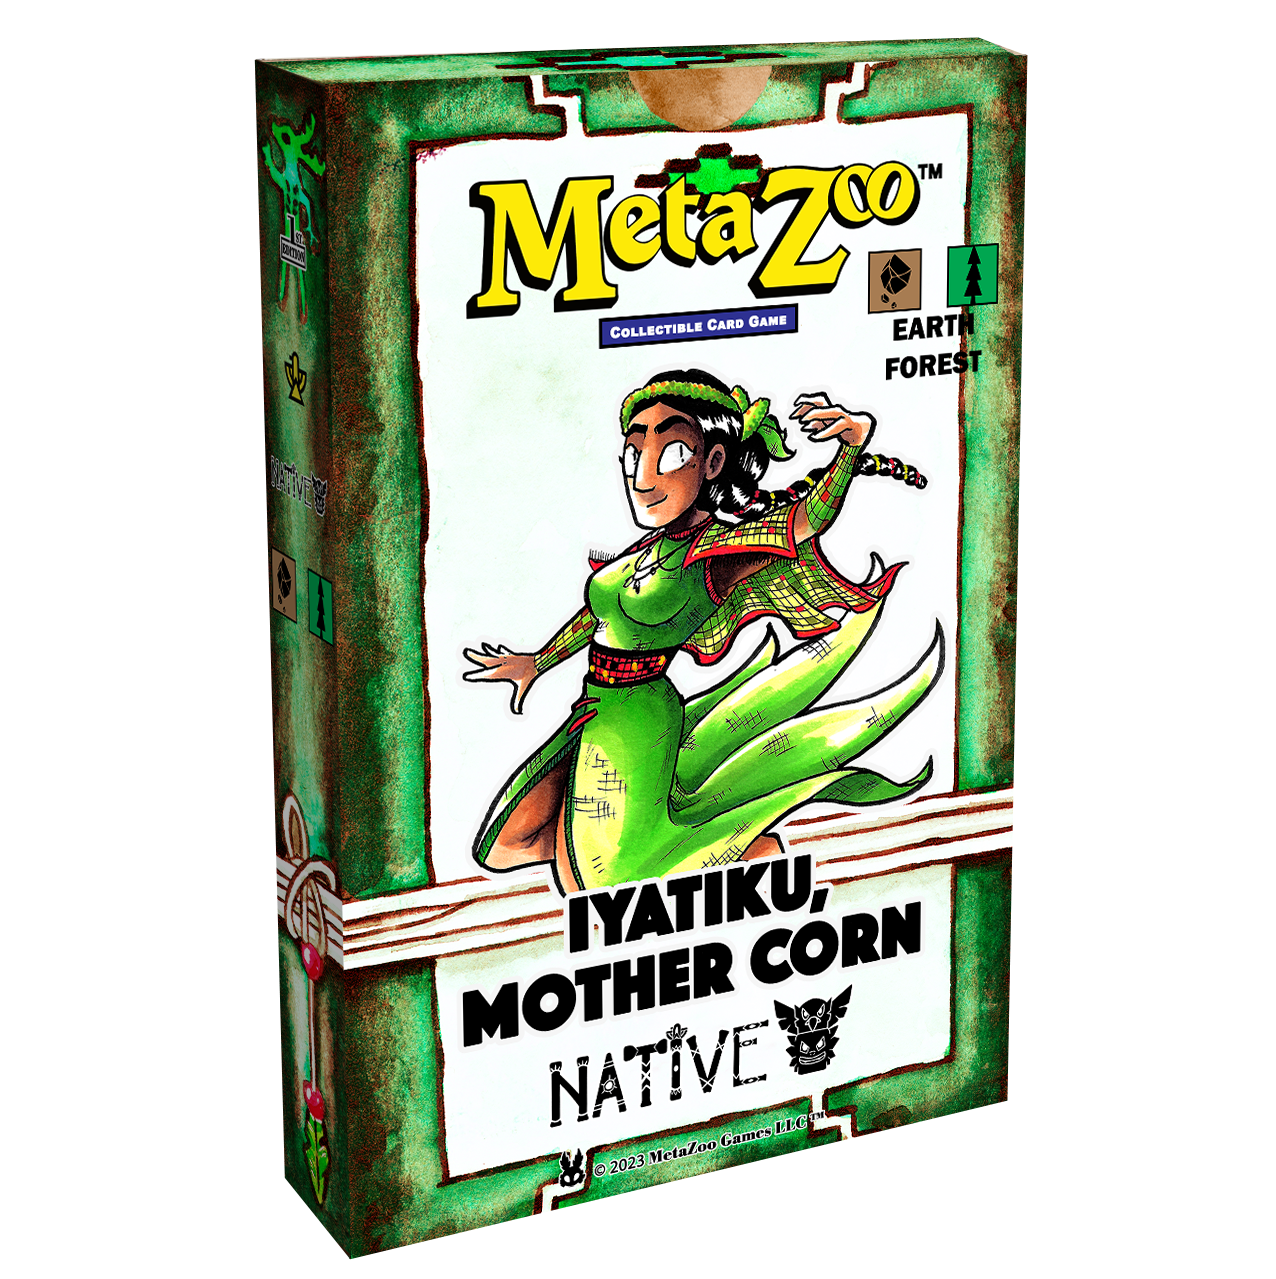 MetaZoo: Cryptid Nations - Native - 1st Edition Themed Deck - Iyatiku, Mother Corn